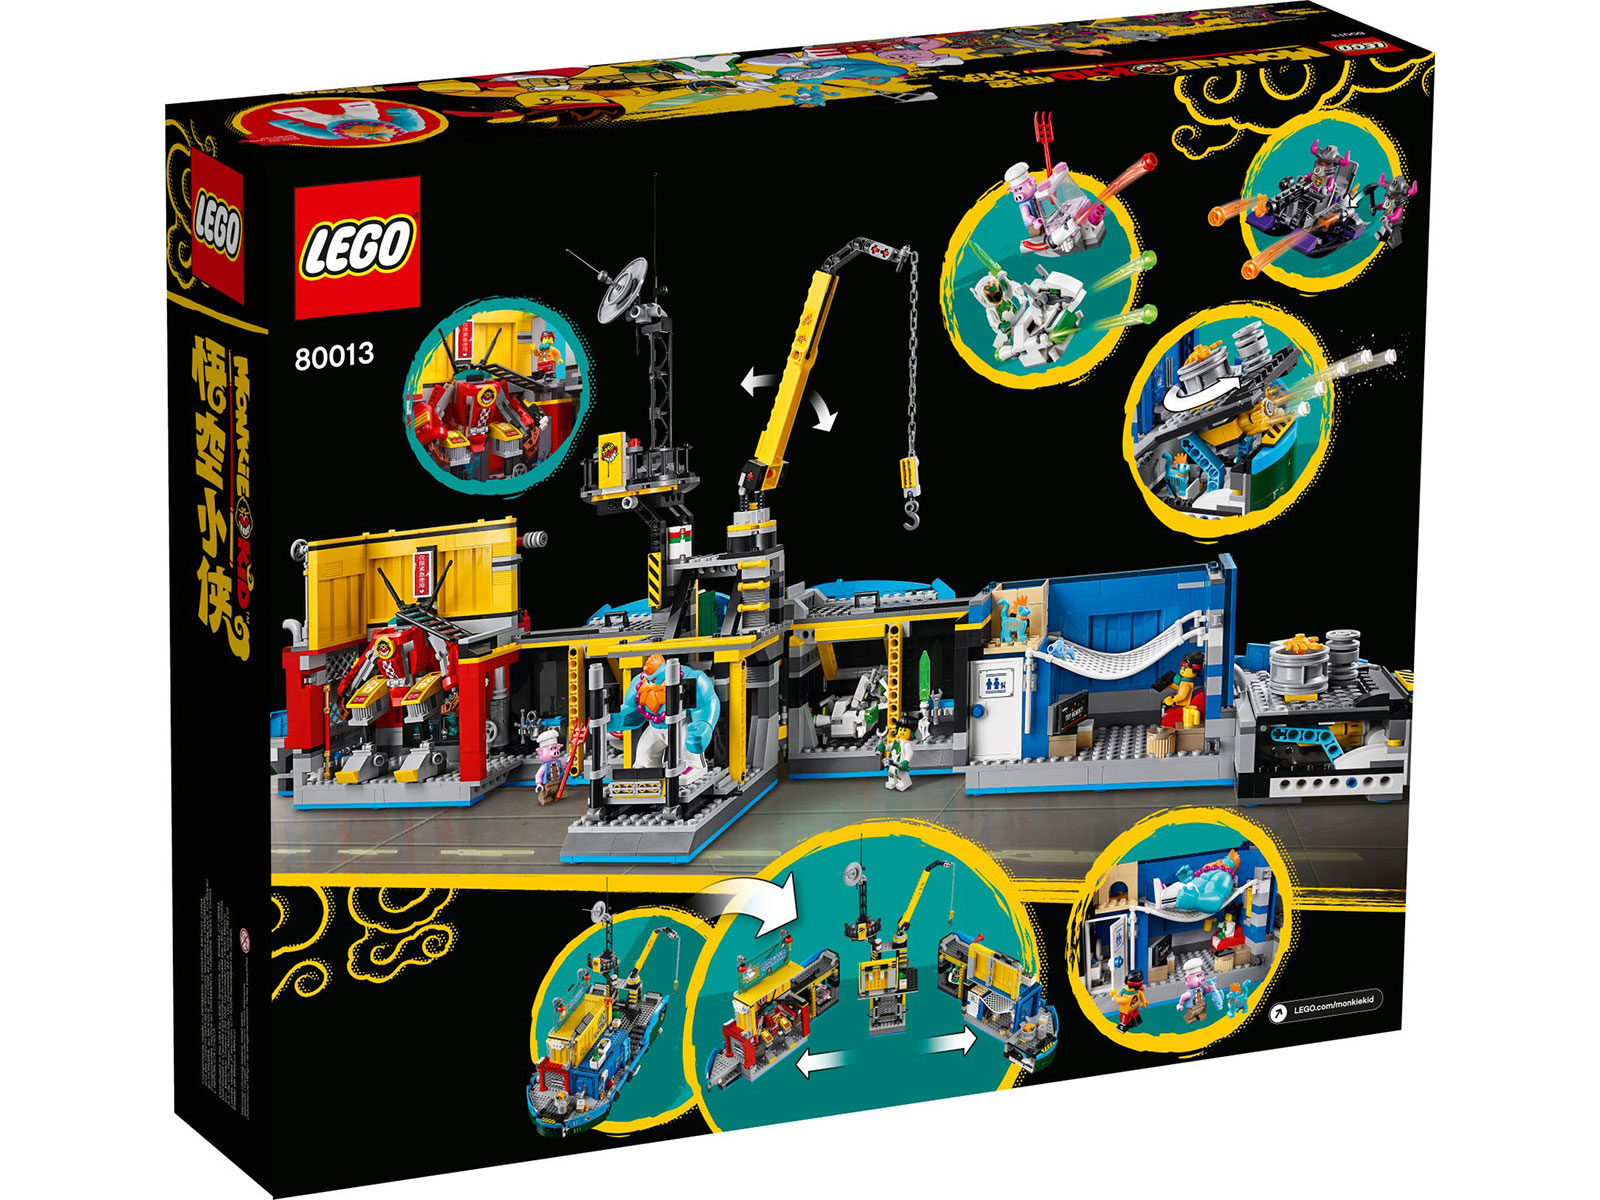 LEGO® Monkie Kid 80013 - Monkie Kids geheime Teambasis